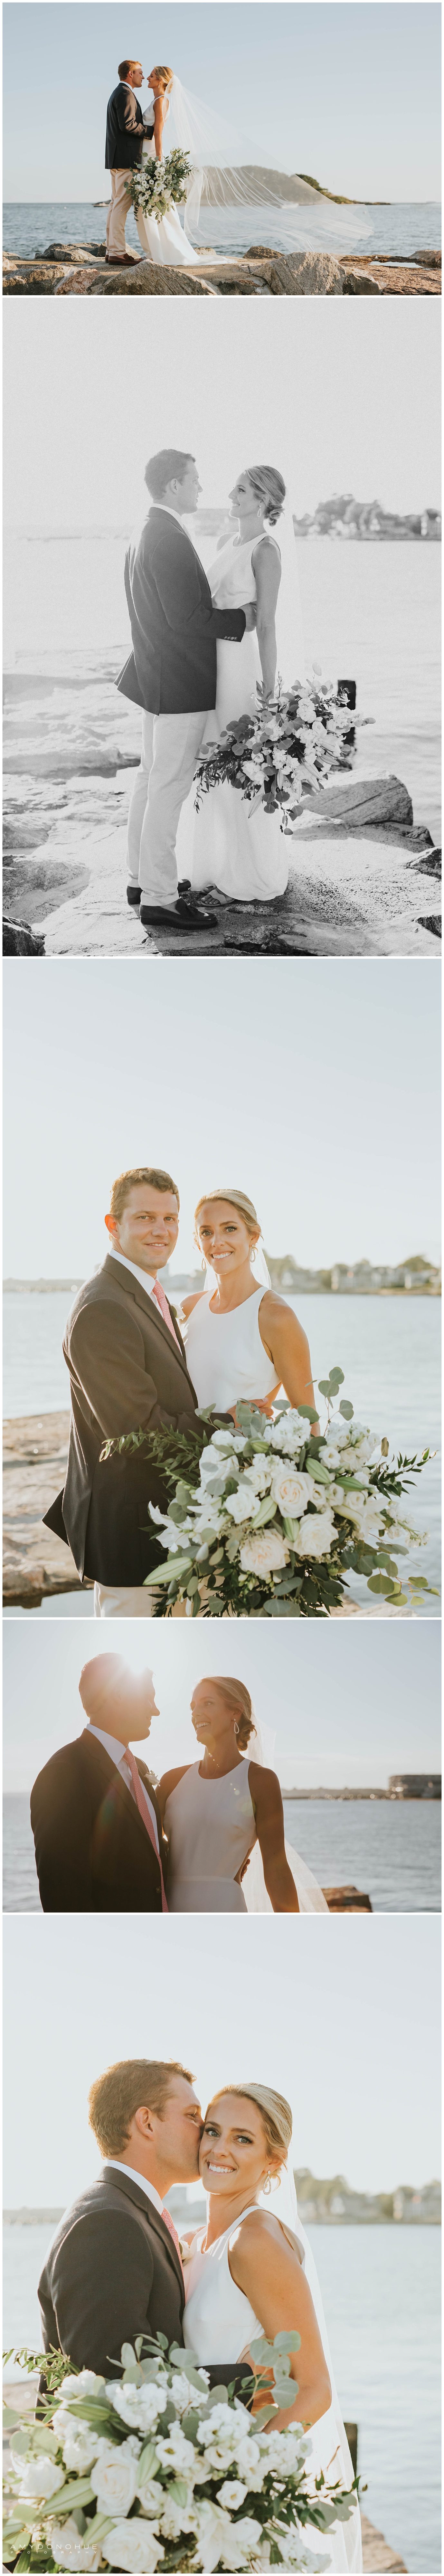 Beach Wedding Photos | New England Wedding Photographer | © Amy Donohue Photography